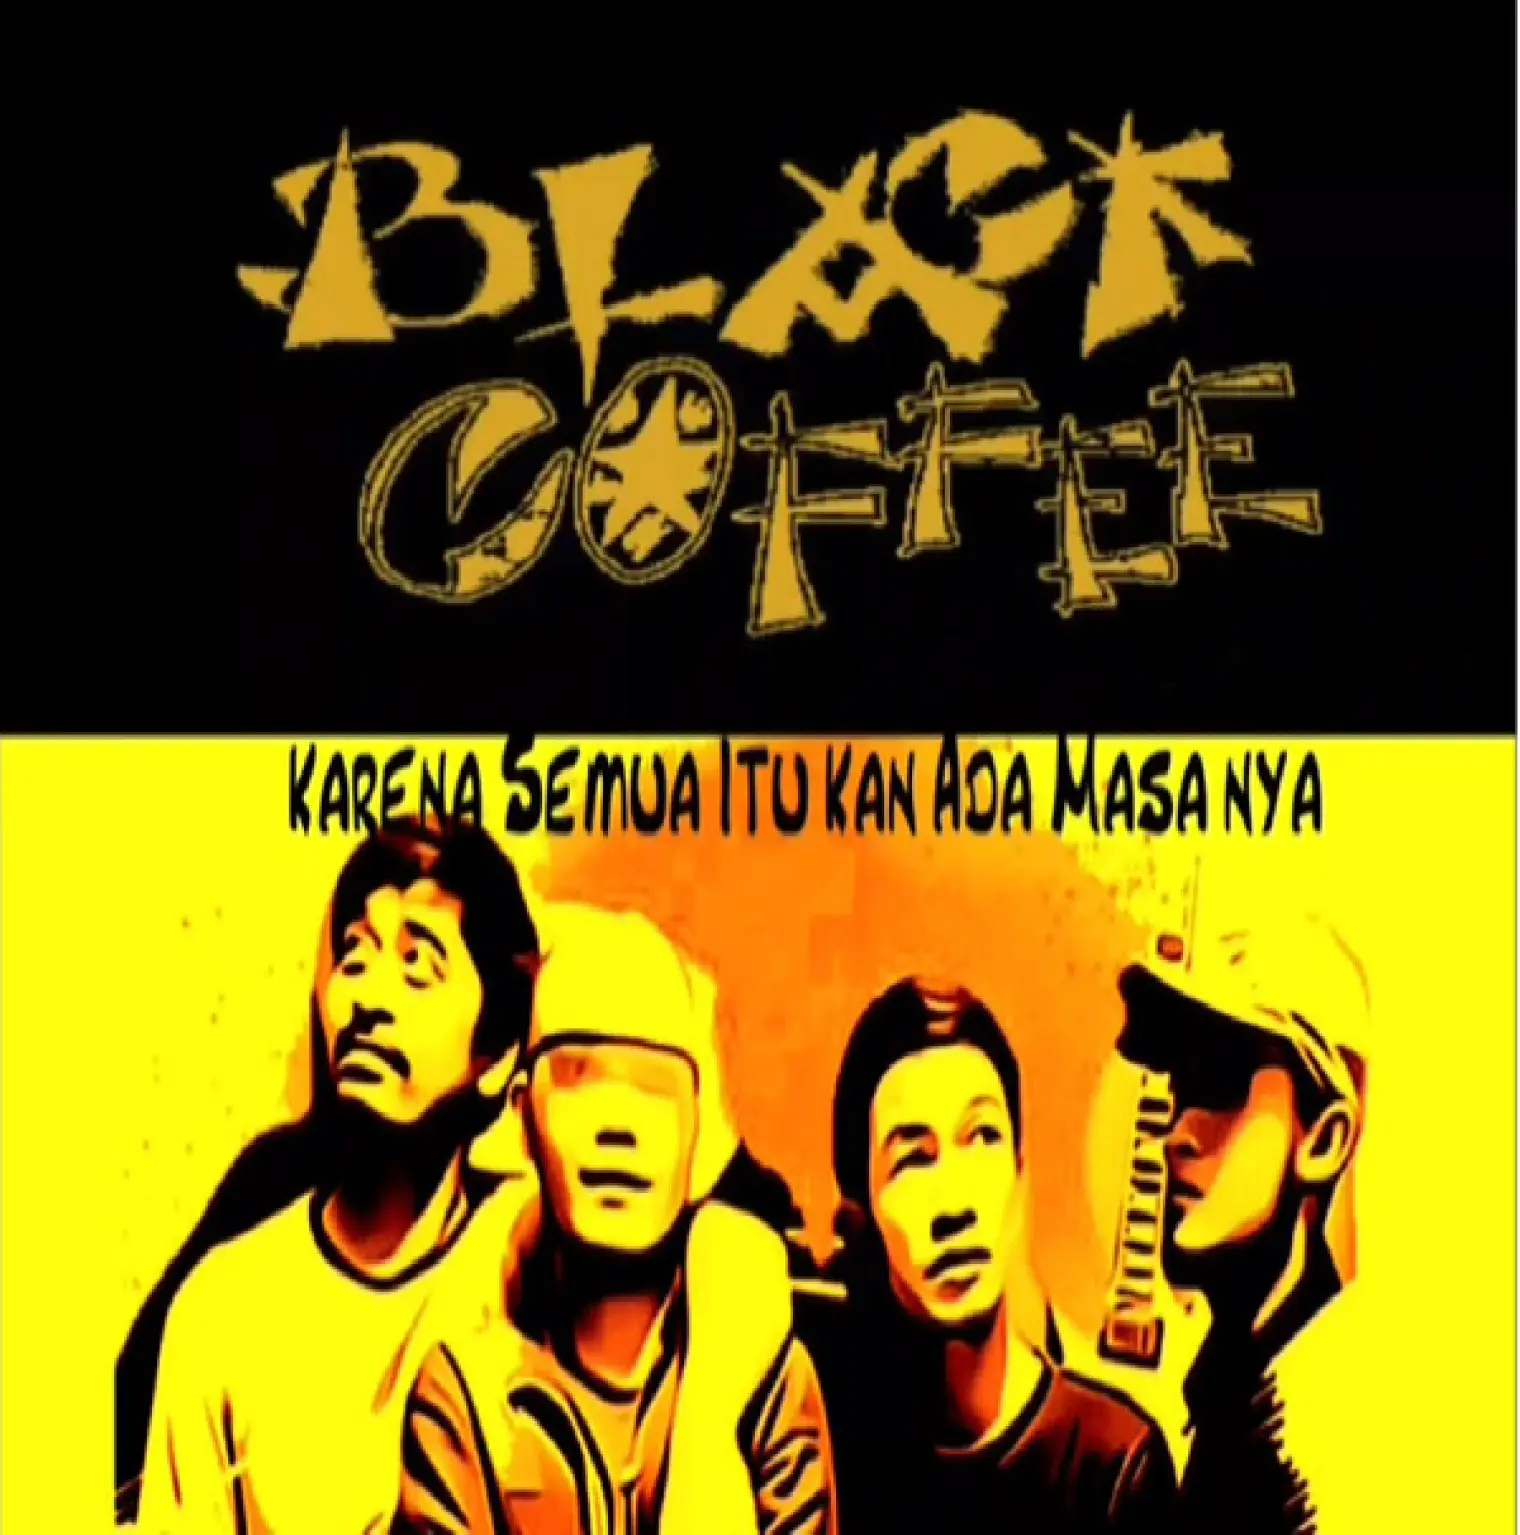 SIAM (Semua Itu Ada Masanya) -  Black Coffee 